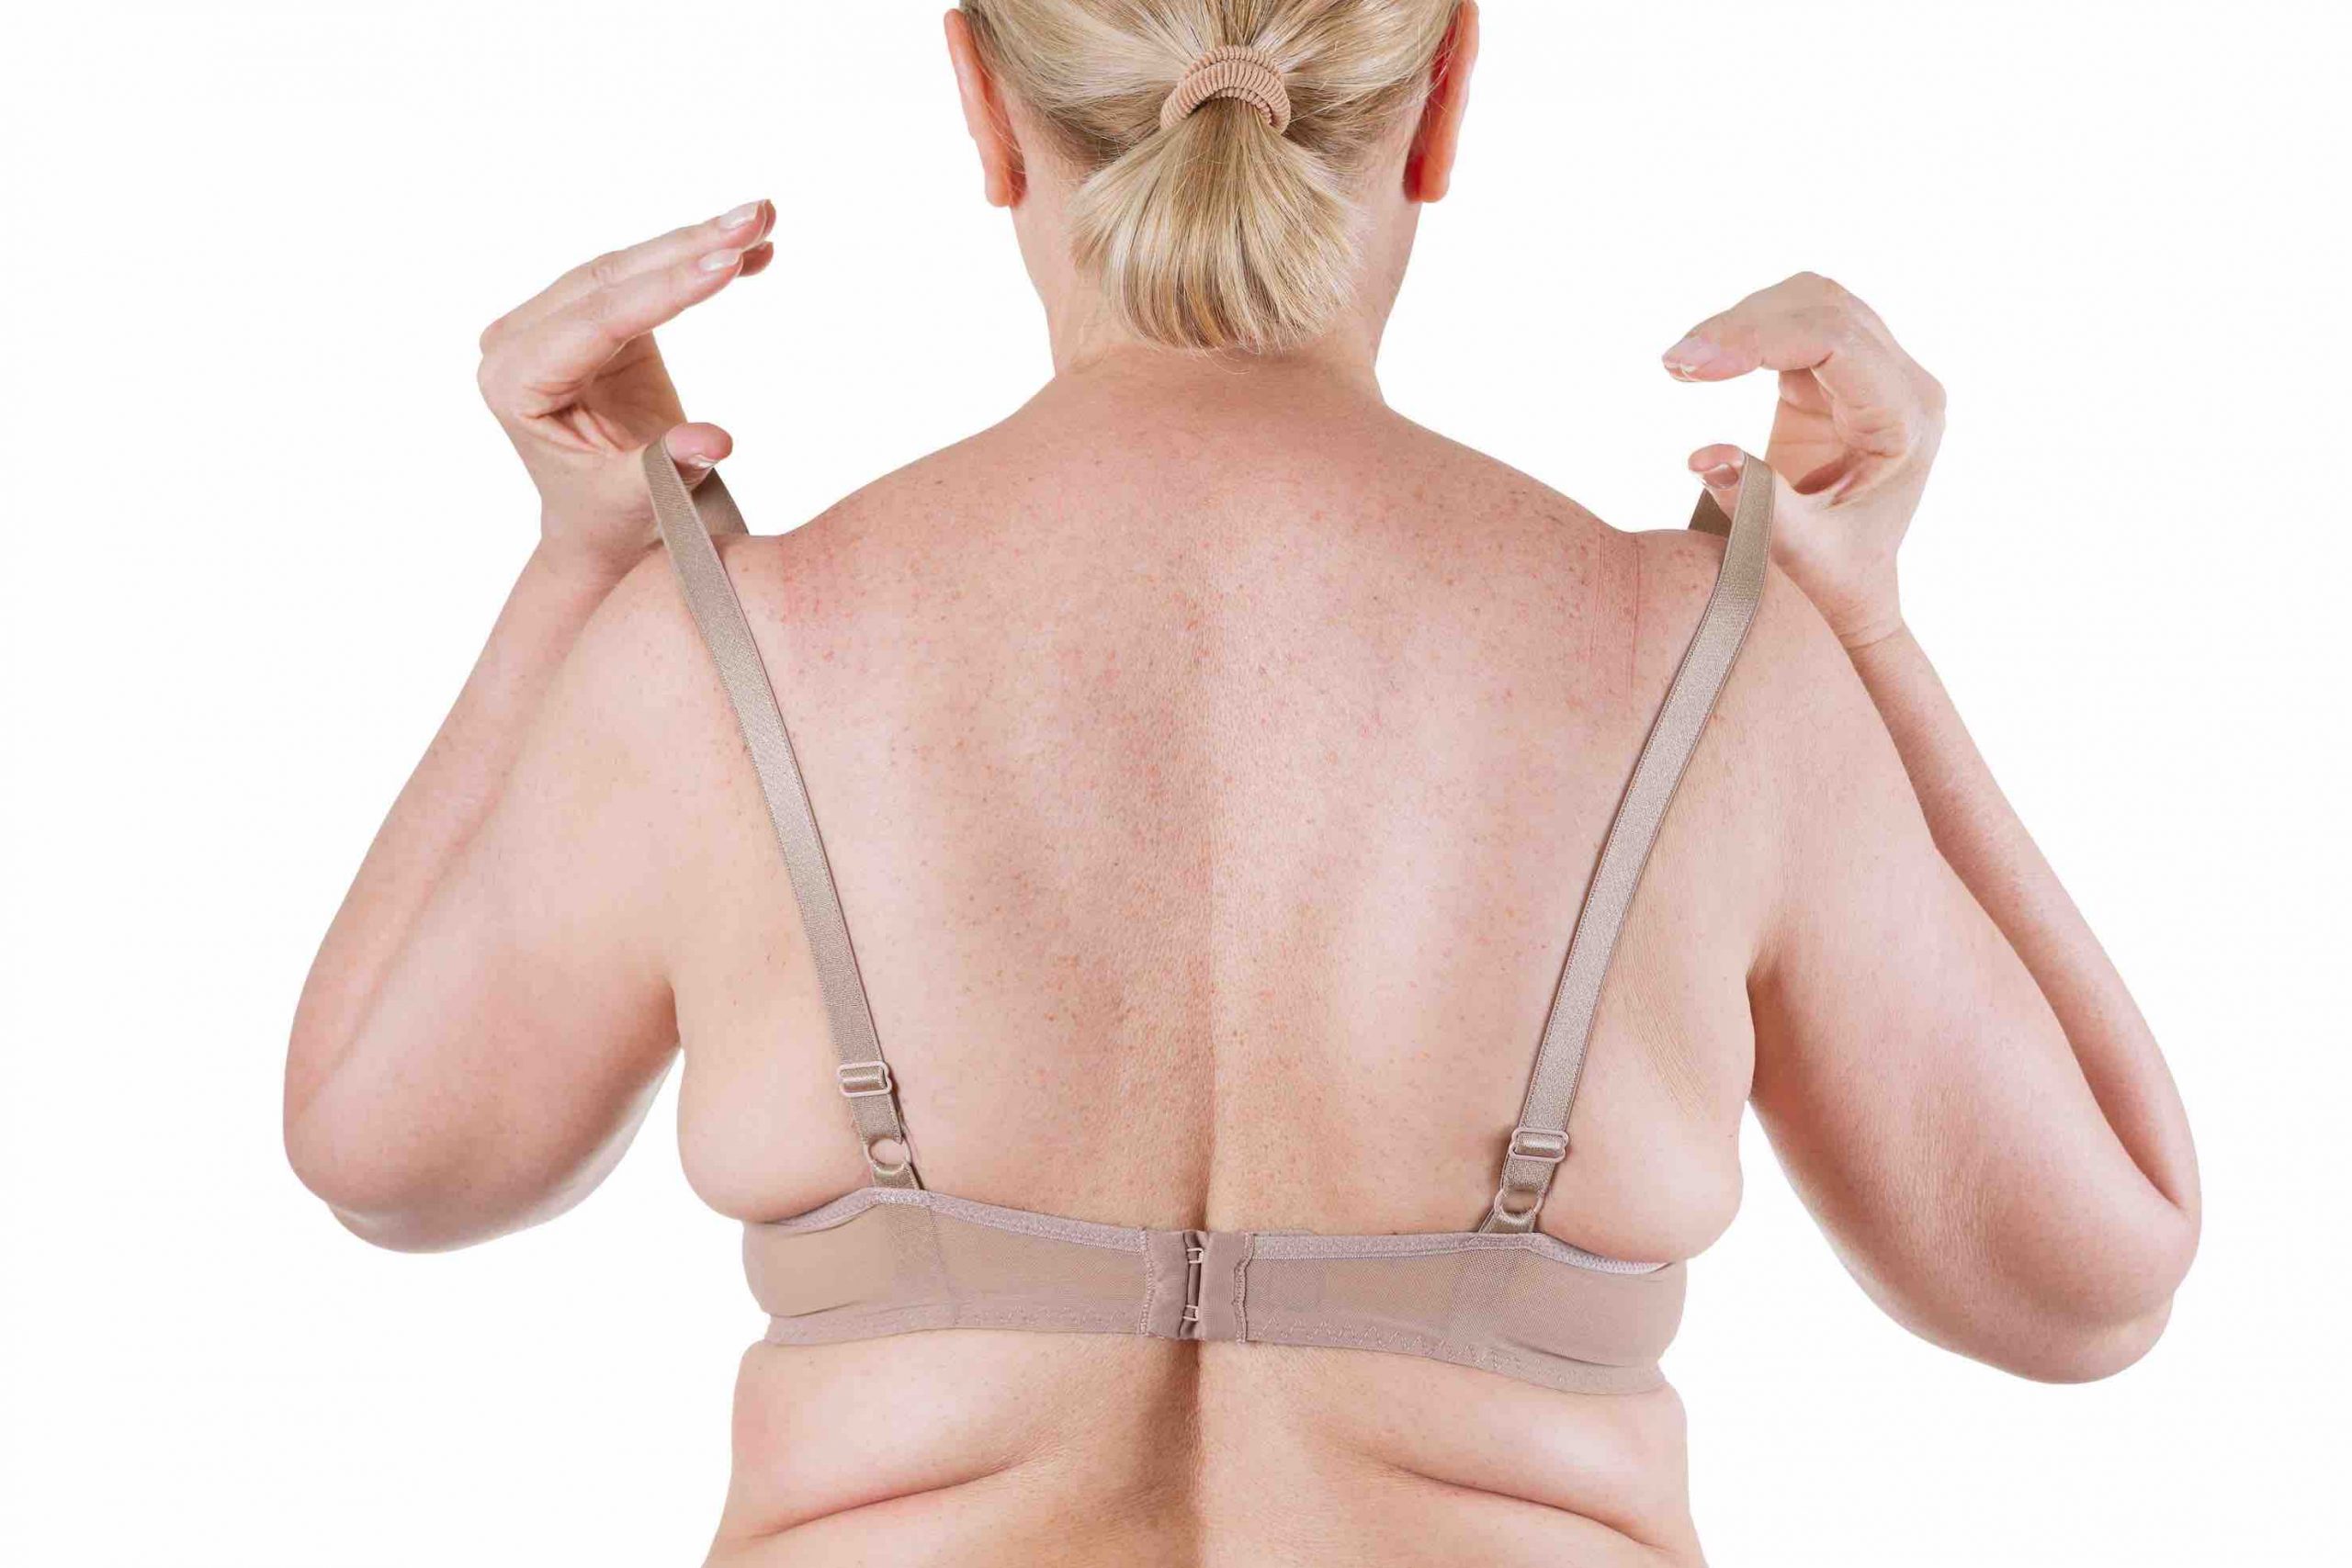 https://goldcoastplasticsurgery.com.au/wp-content/uploads/2021/01/bra-line-back-lift-plastic-surgery-queensland-scaled.jpg